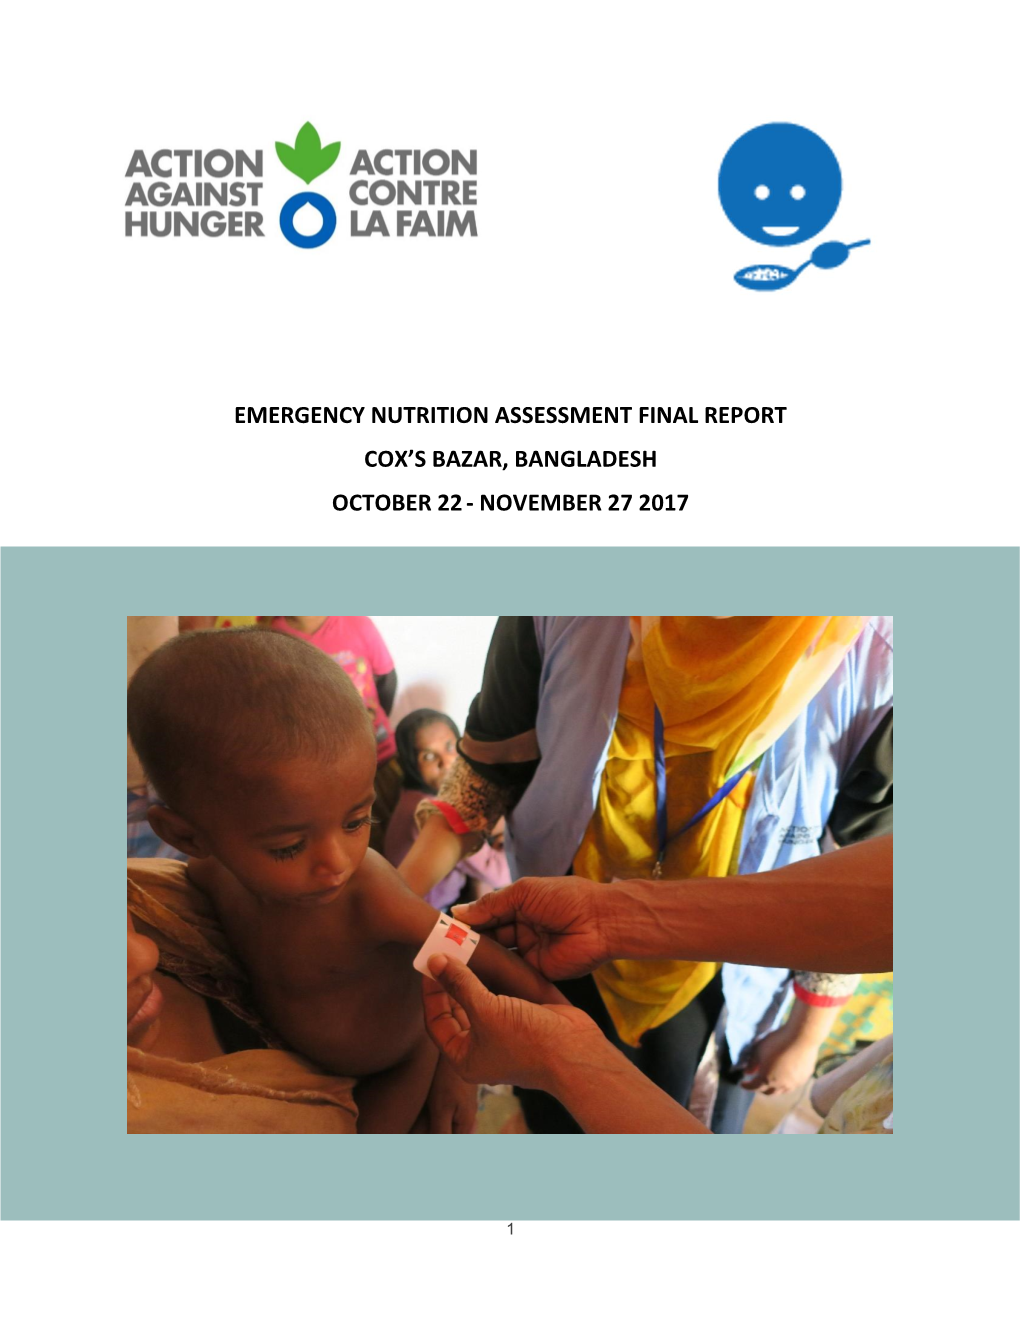 Emergency Nutrition Assessment Final Report Cox's Bazar, Bangladesh October 22- November 27 2017